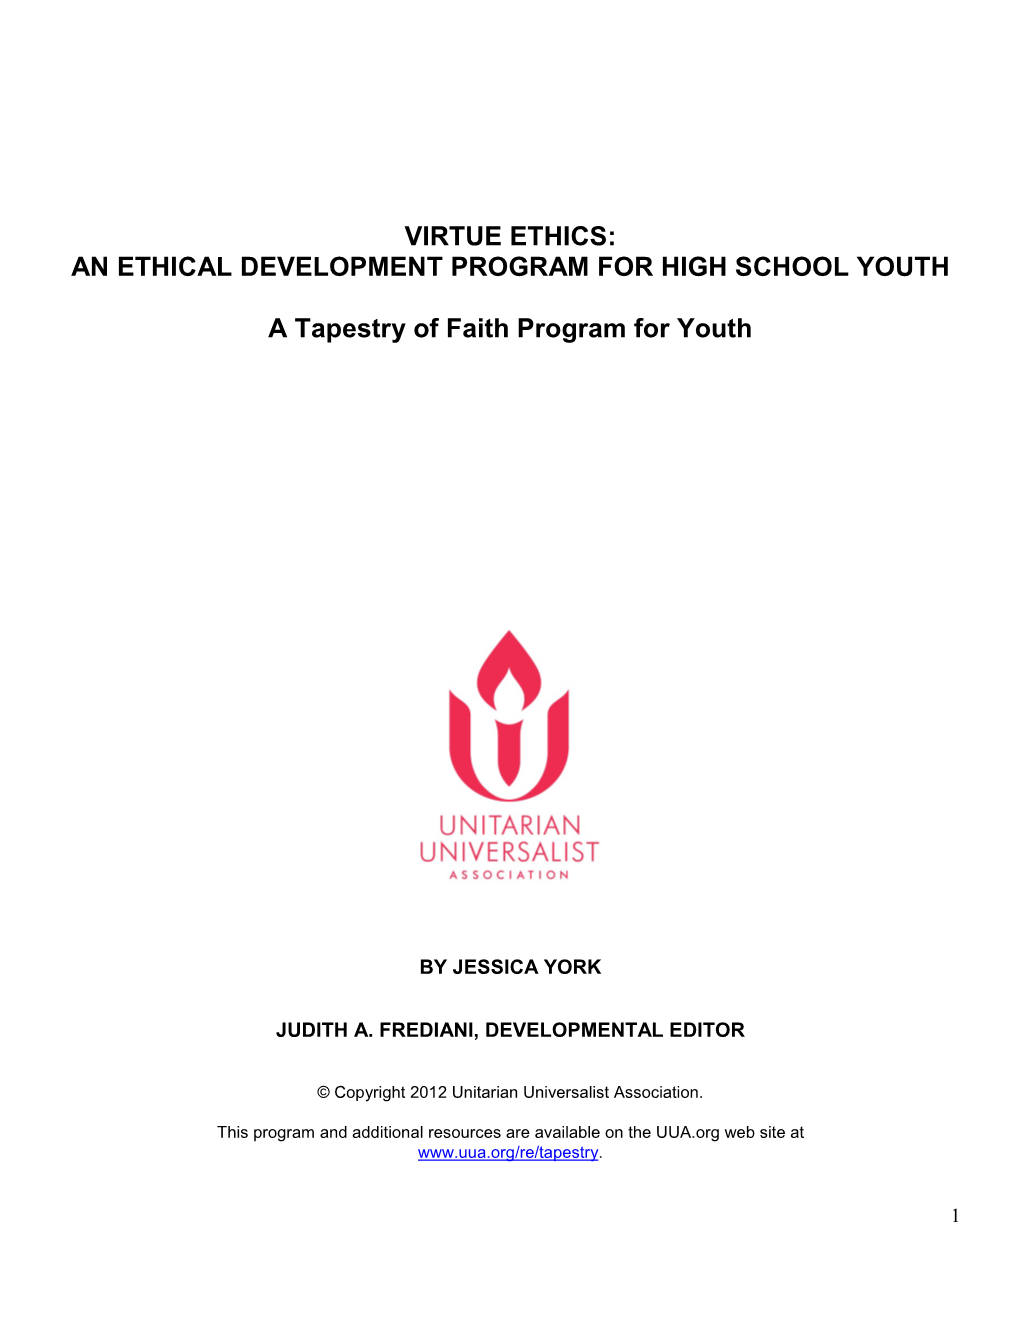 Virtue Ethics: an Ethical Development Program for High School Youth